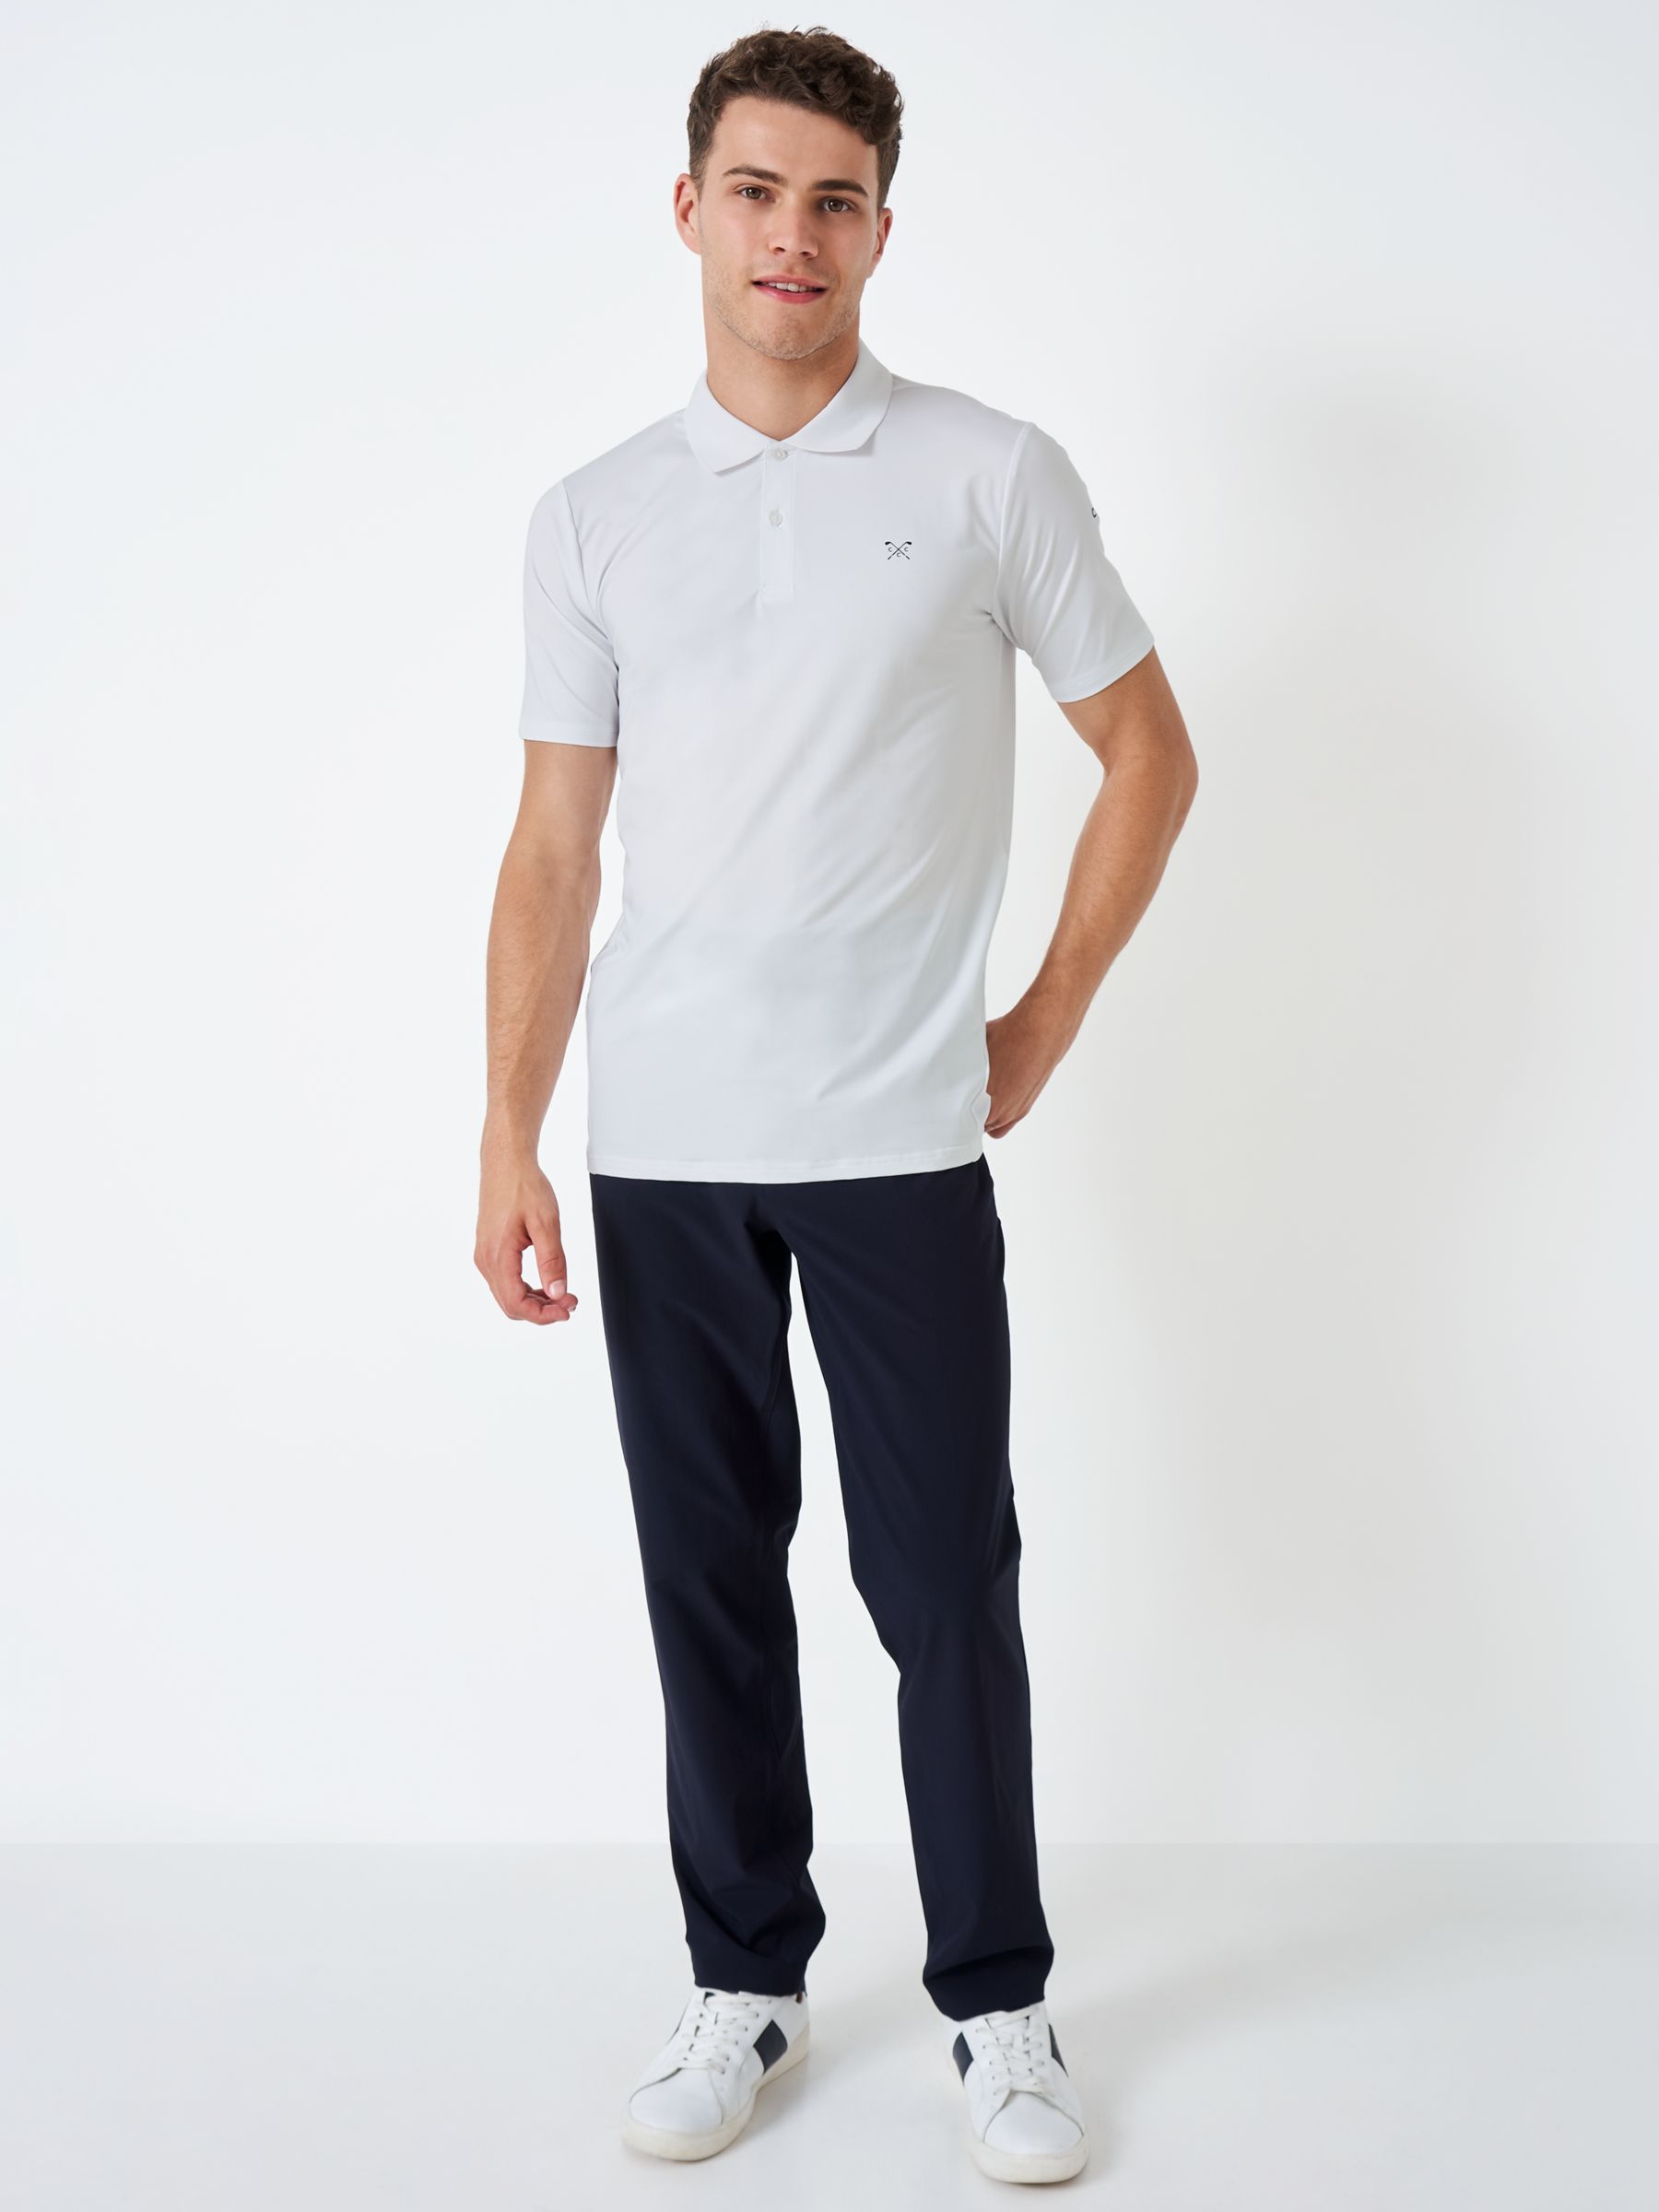 Crew Clothing Smart Golf Polo Shirt, White, XL